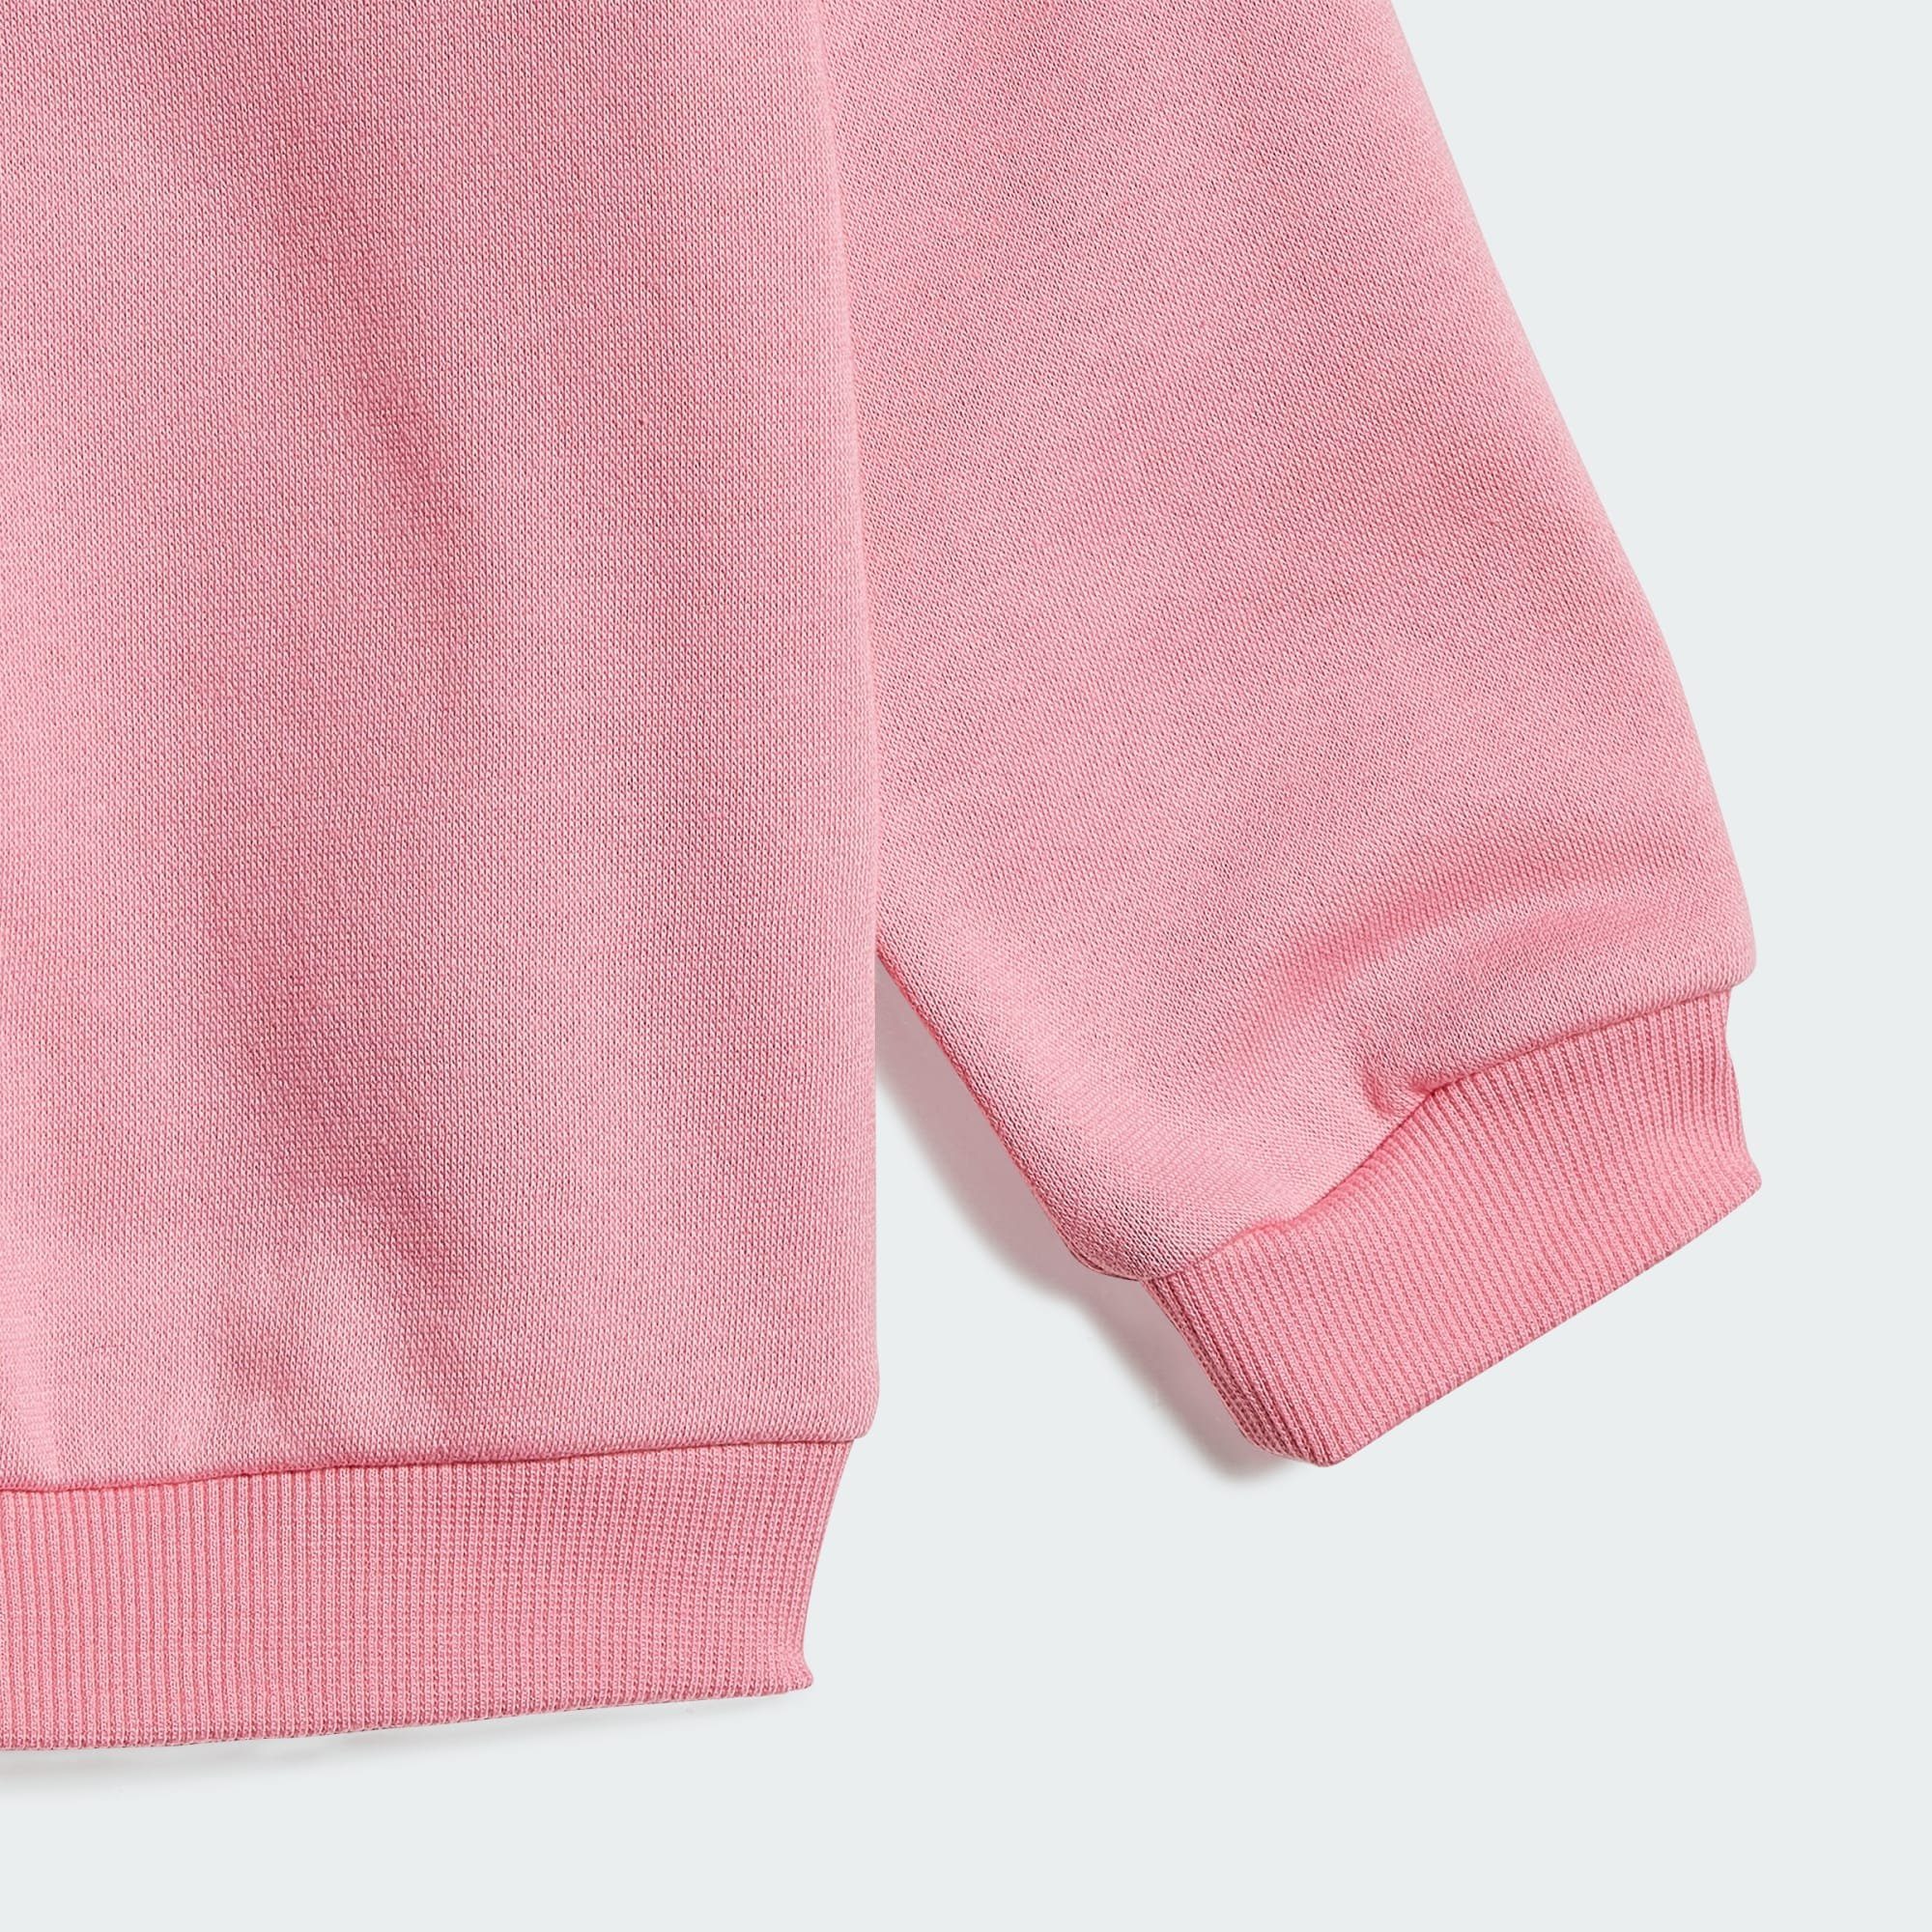 OF White Pink BADGE / Trainingsanzug Bliss JOGGINGANZUG adidas Sportswear SPORT